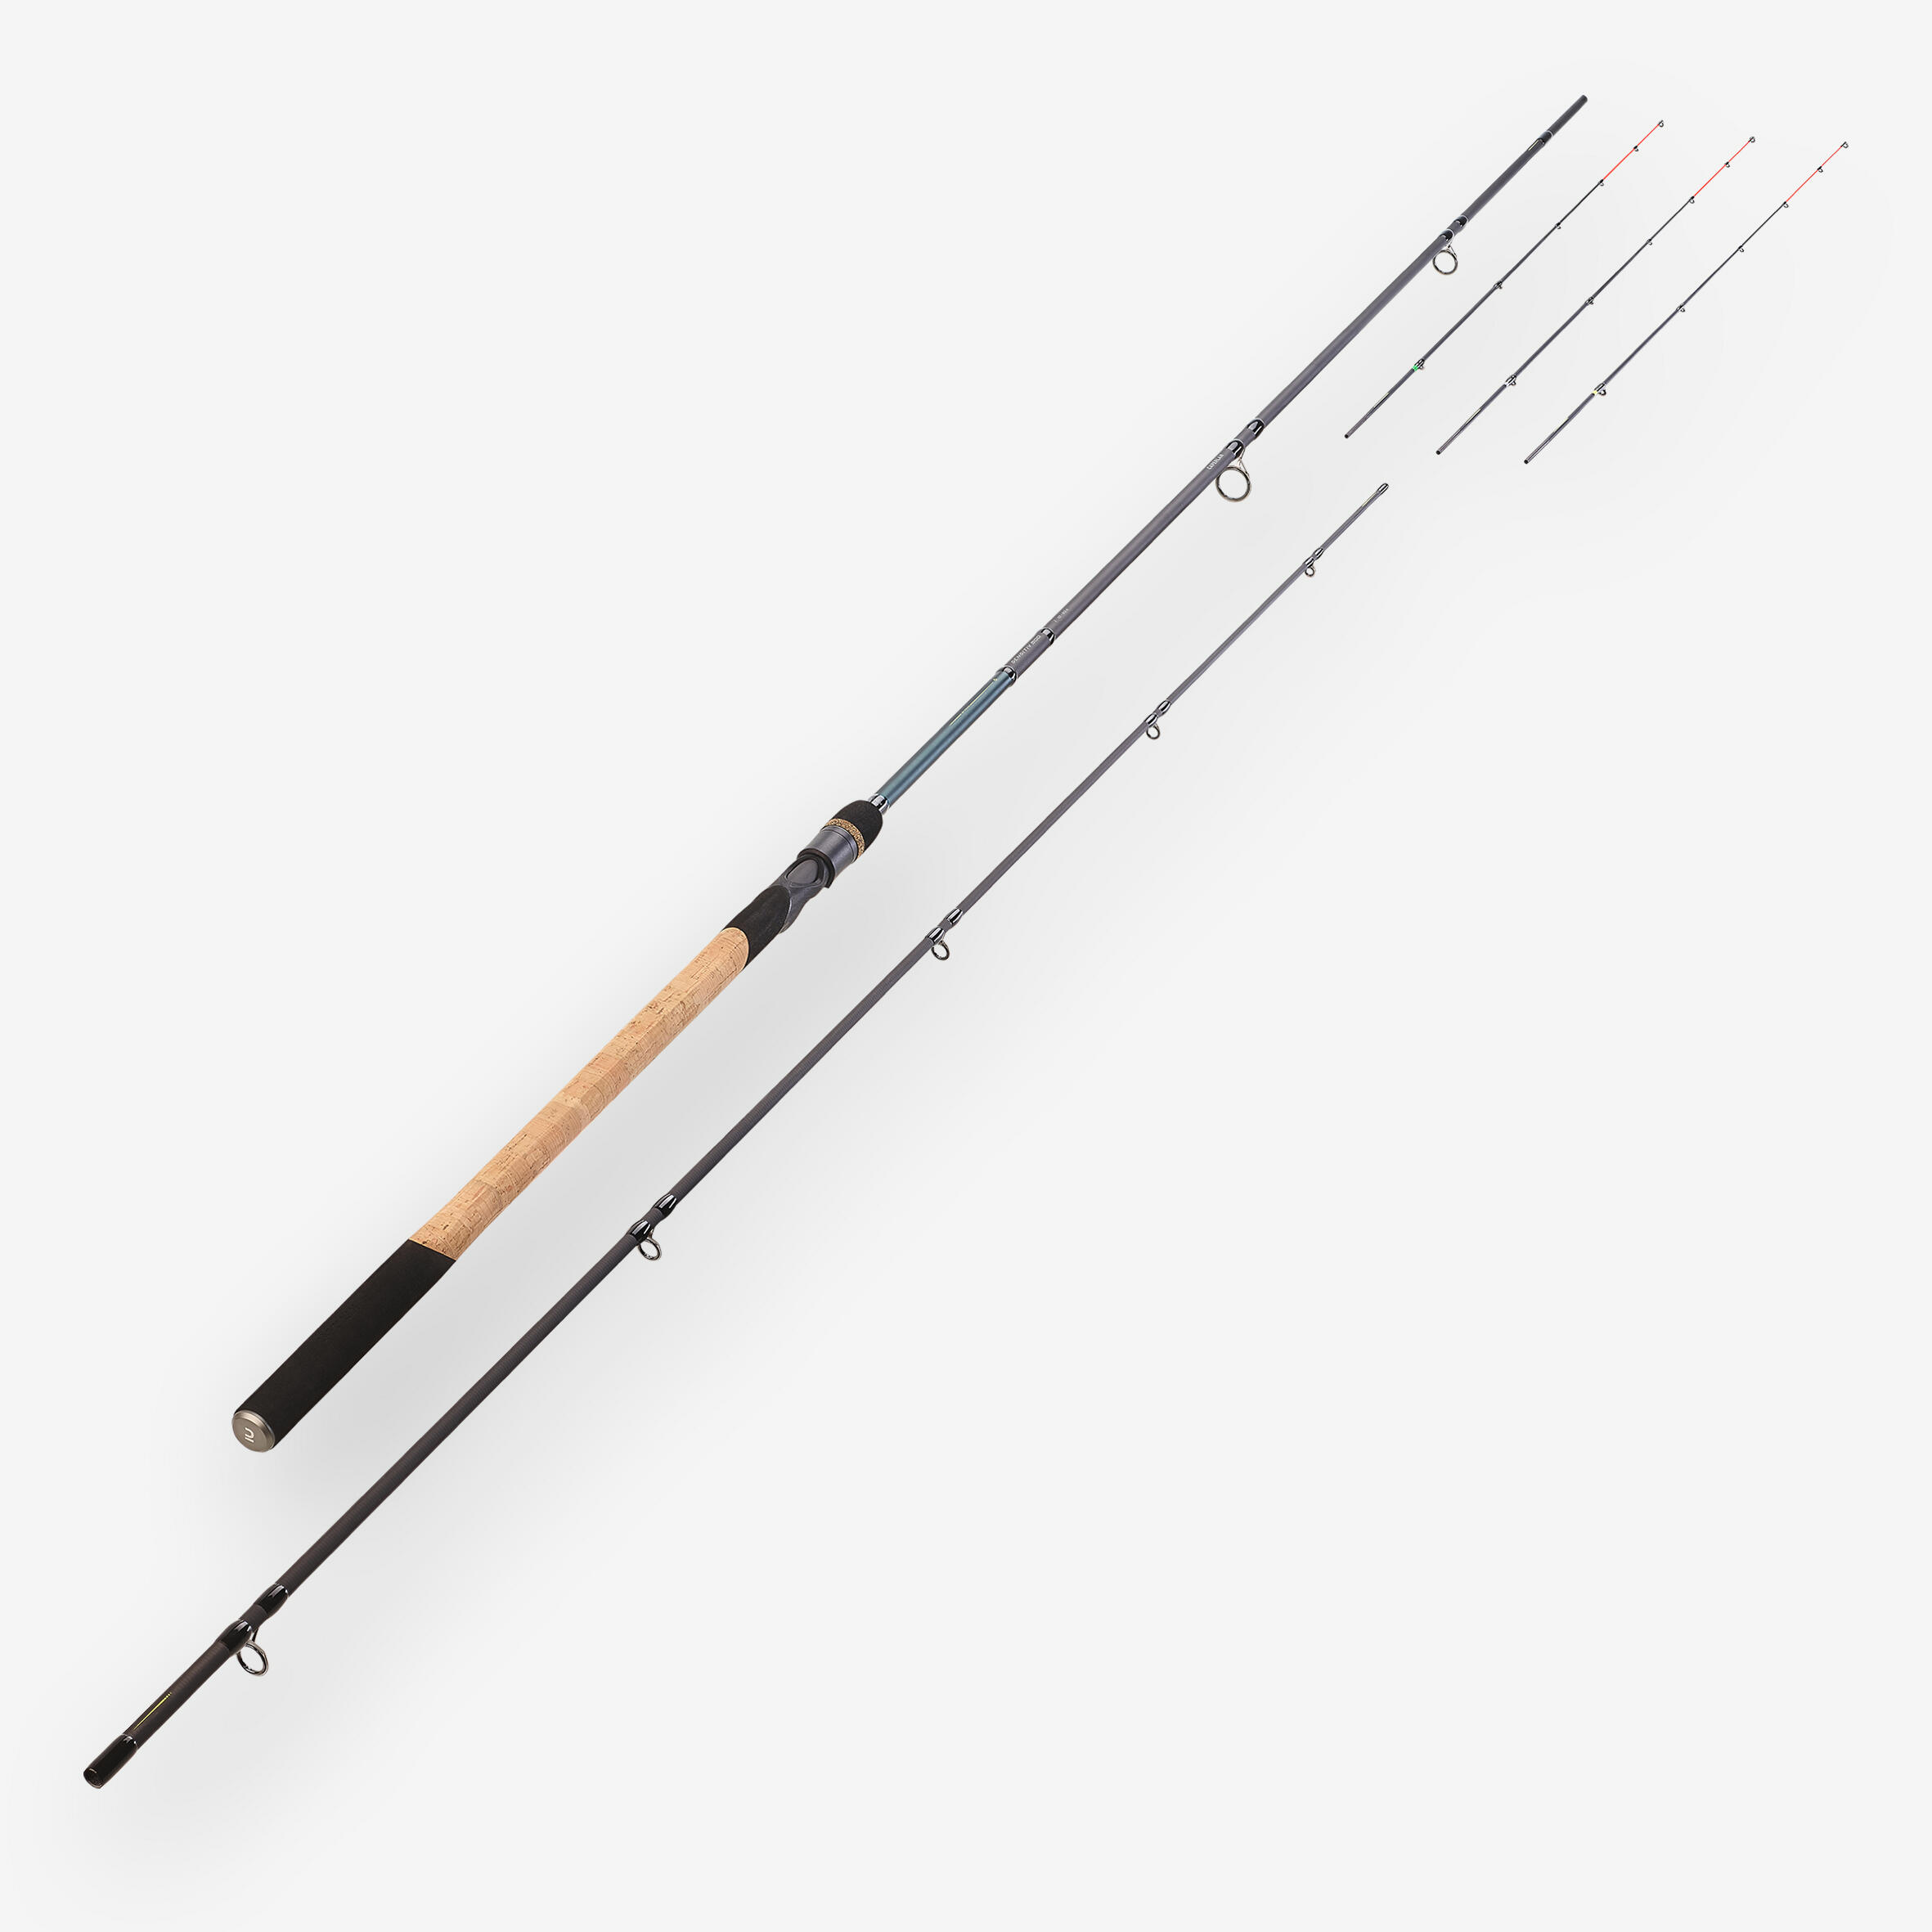 Feeder fishing rod 3m00 - Sensitiv 500 3m00 10/40 g 1/11